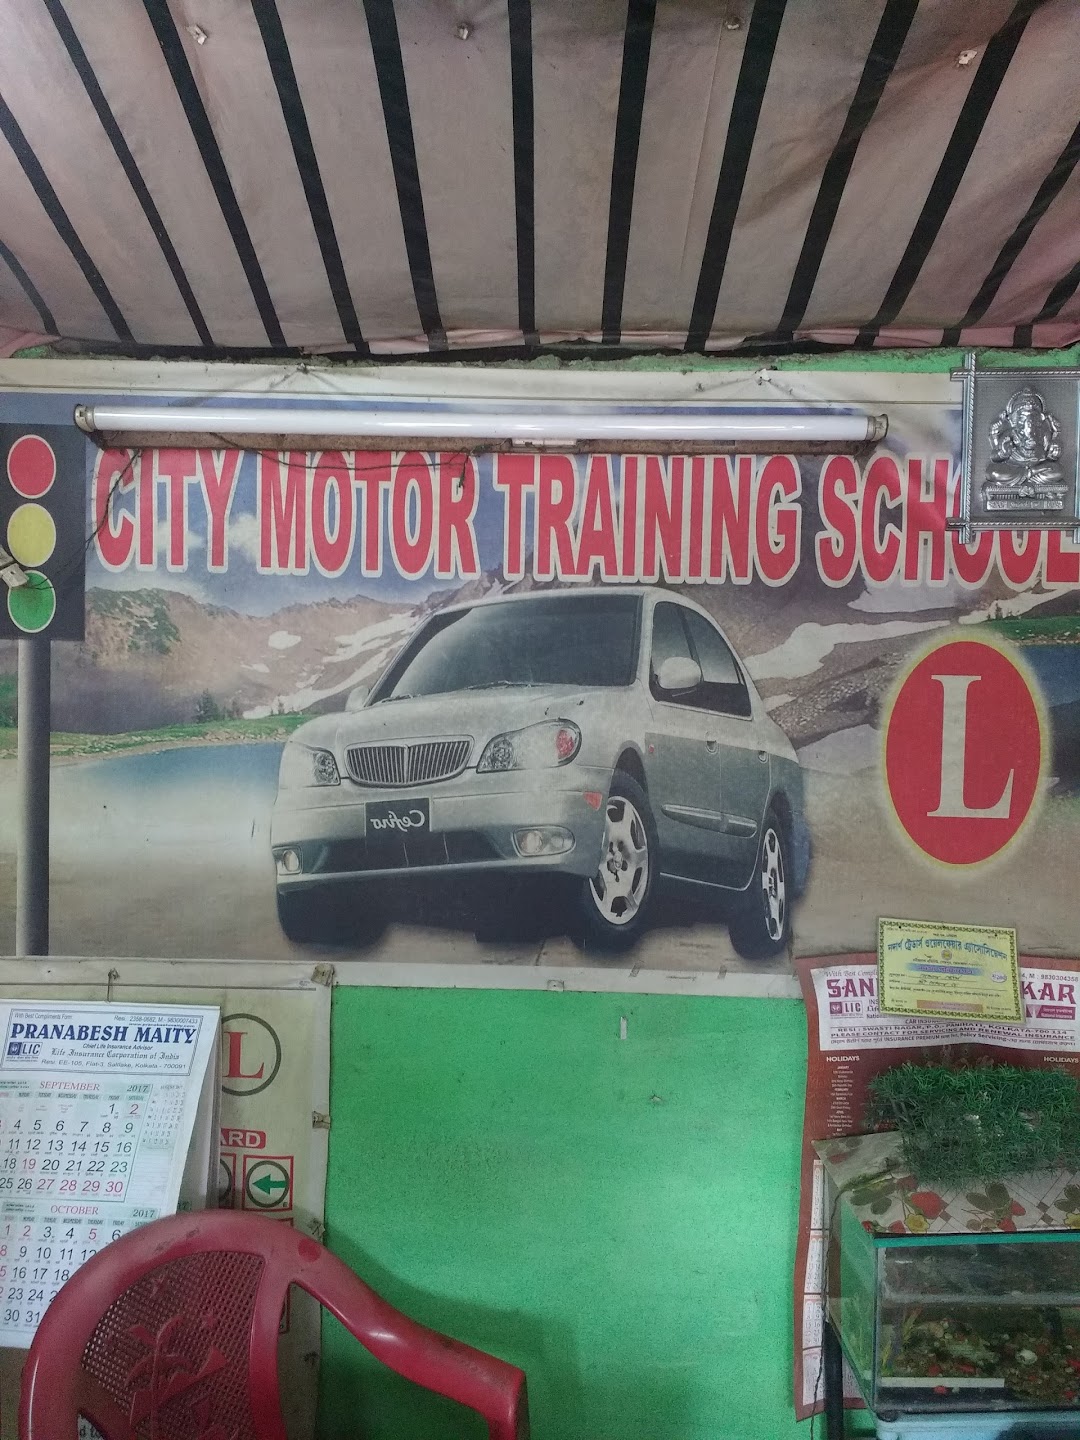 City Motor Training School